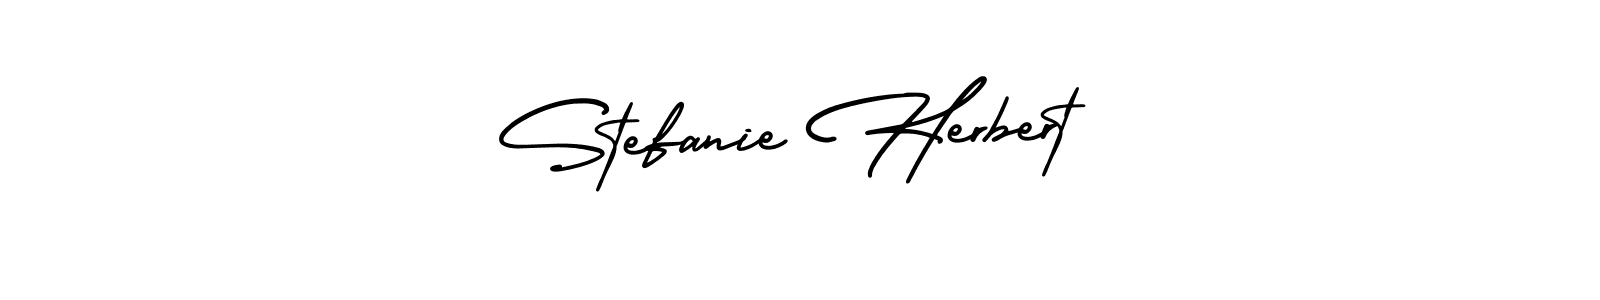 How to Draw Stefanie Herbert signature style? AmerikaSignatureDemo-Regular is a latest design signature styles for name Stefanie Herbert. Stefanie Herbert signature style 3 images and pictures png